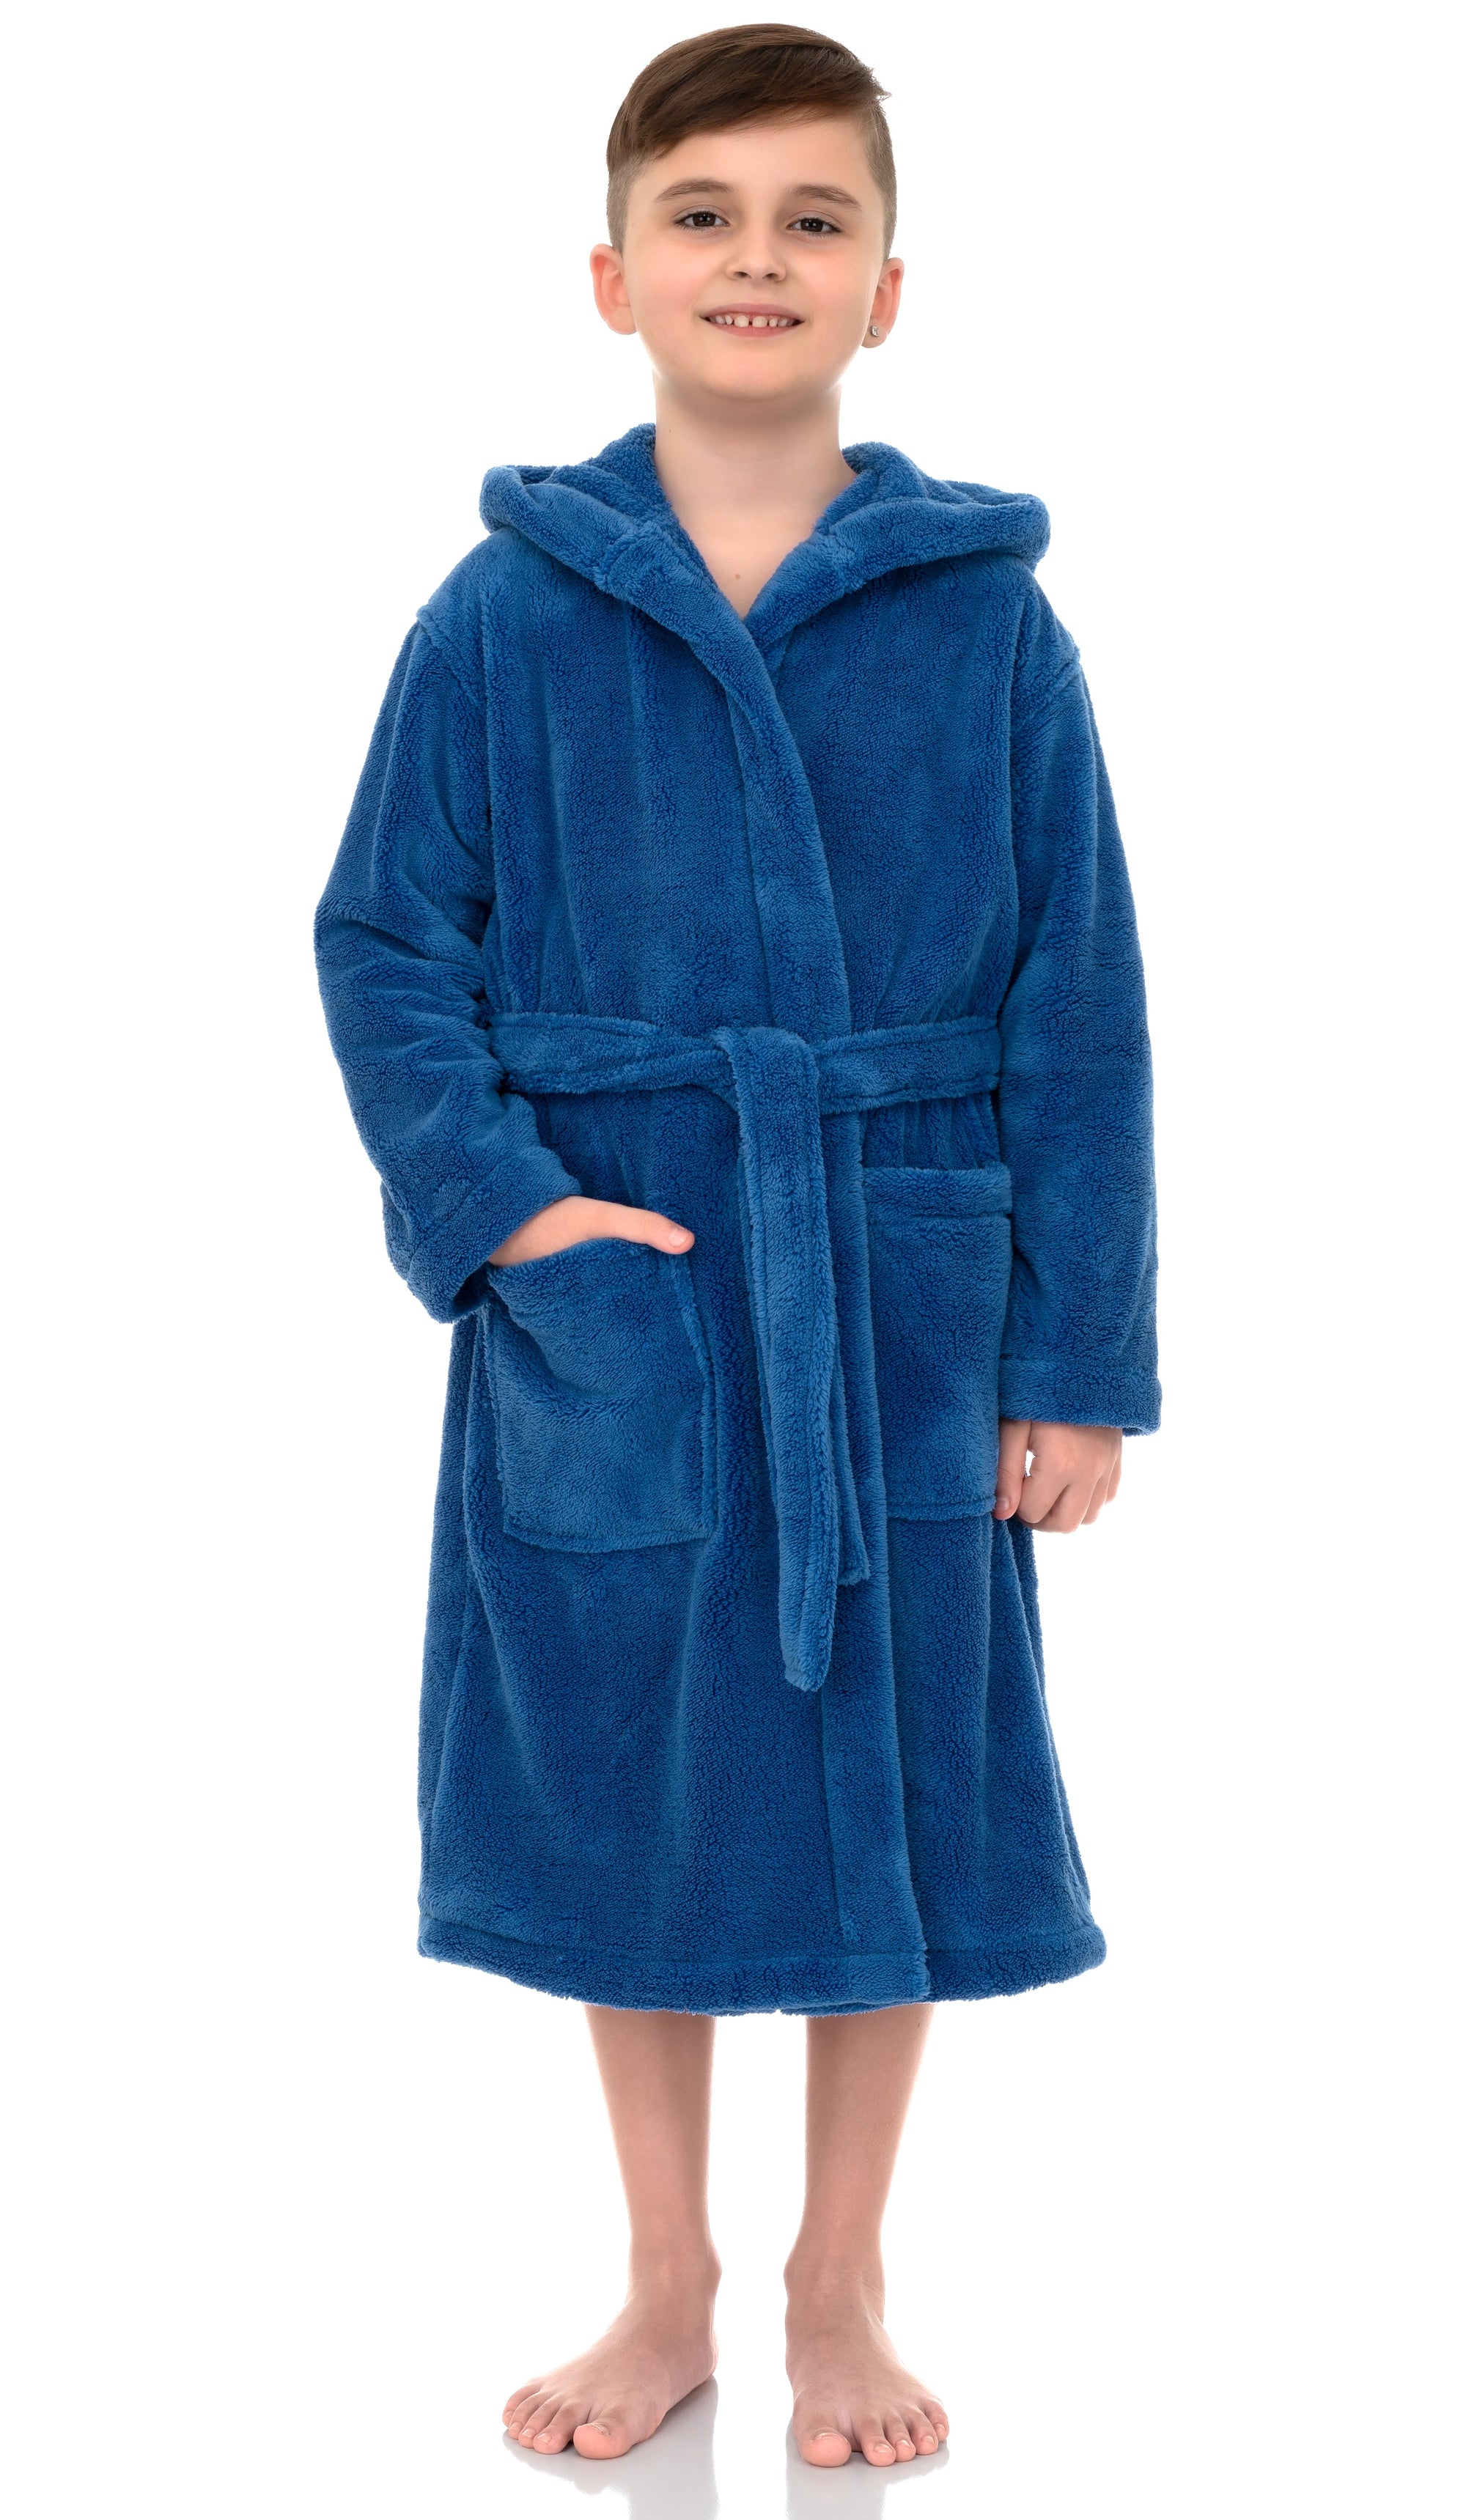 TowelSelections Boys Robe, Kids Plush Hooded Fleece Bathrobe